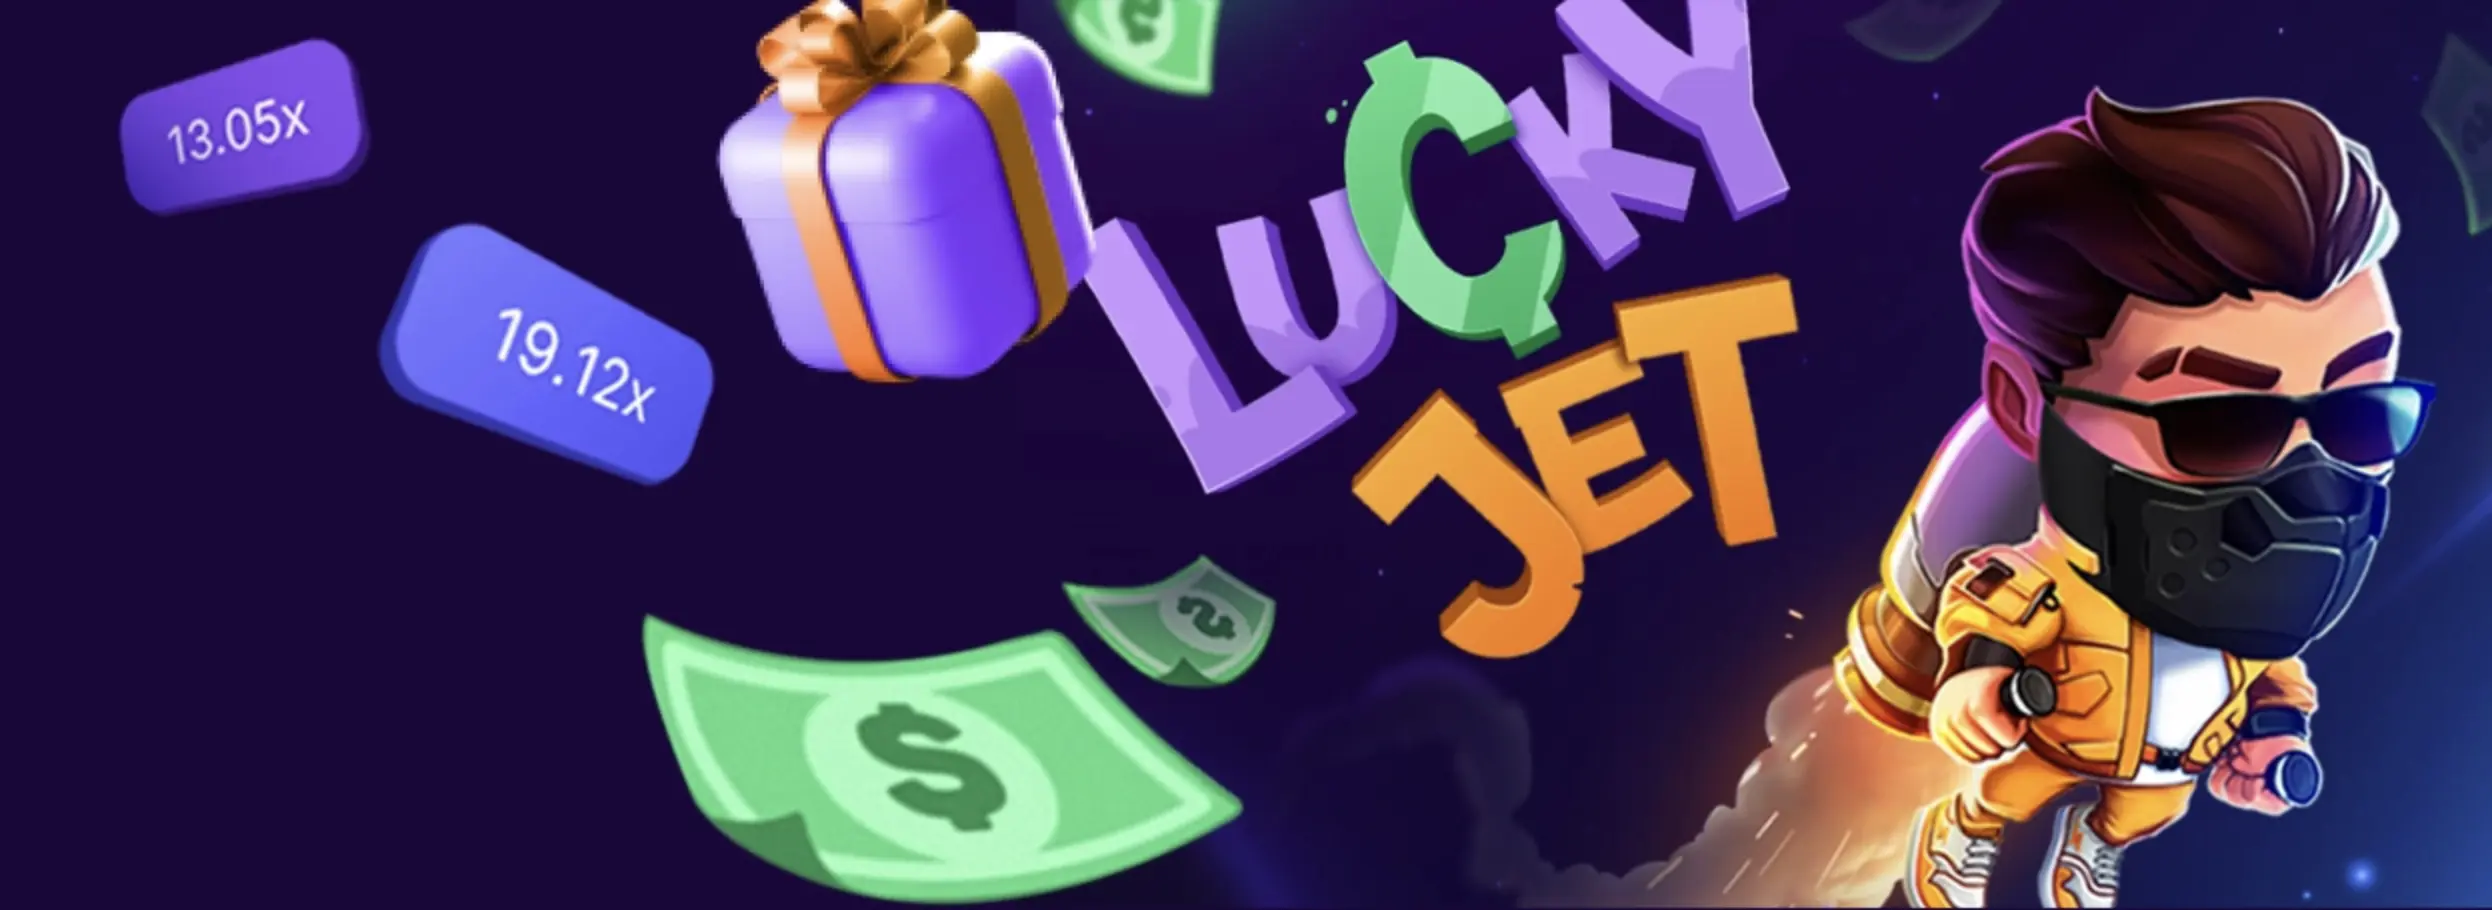 Jogo online gratis no jogalo lucky jet